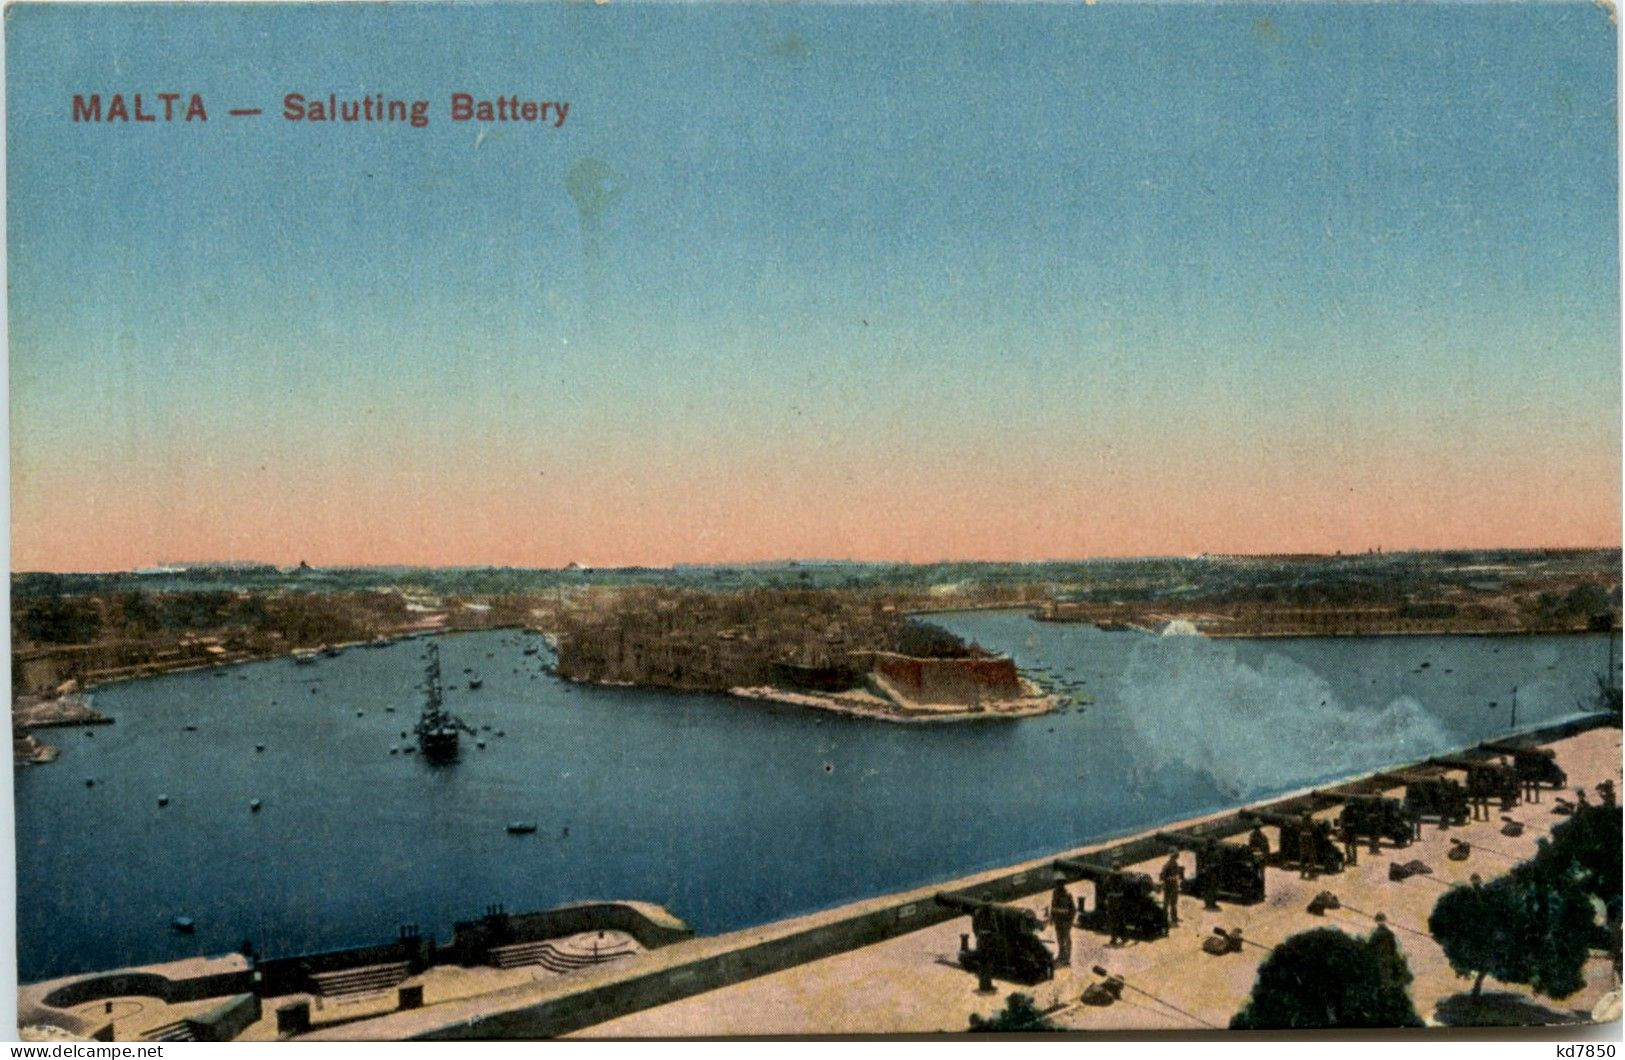 Malta - Saluting Battery - Malte